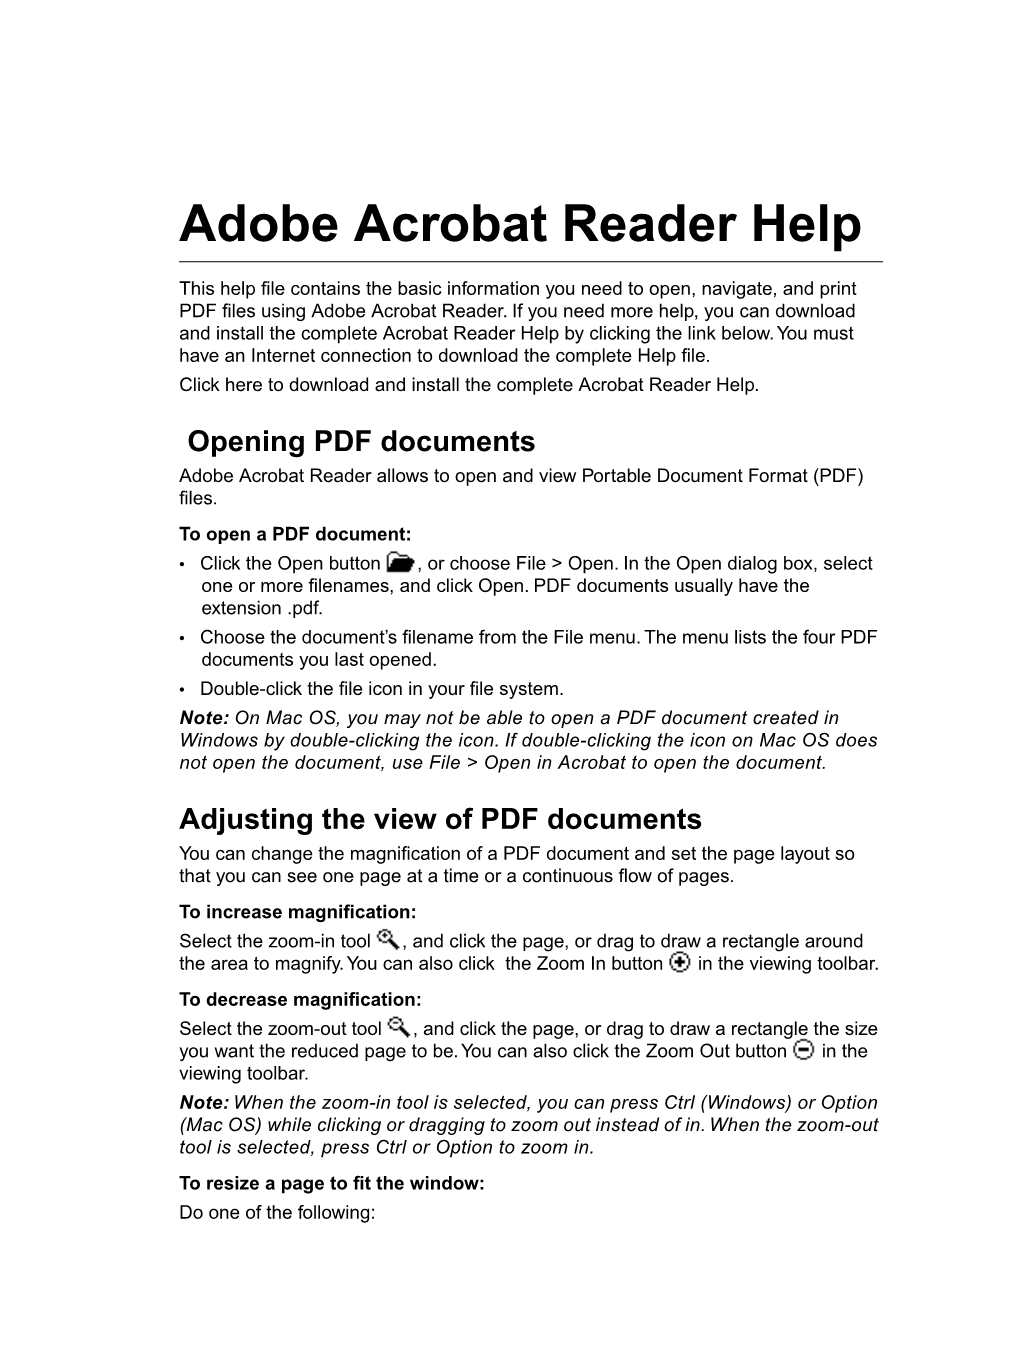 Adobe Acrobat Reader Help